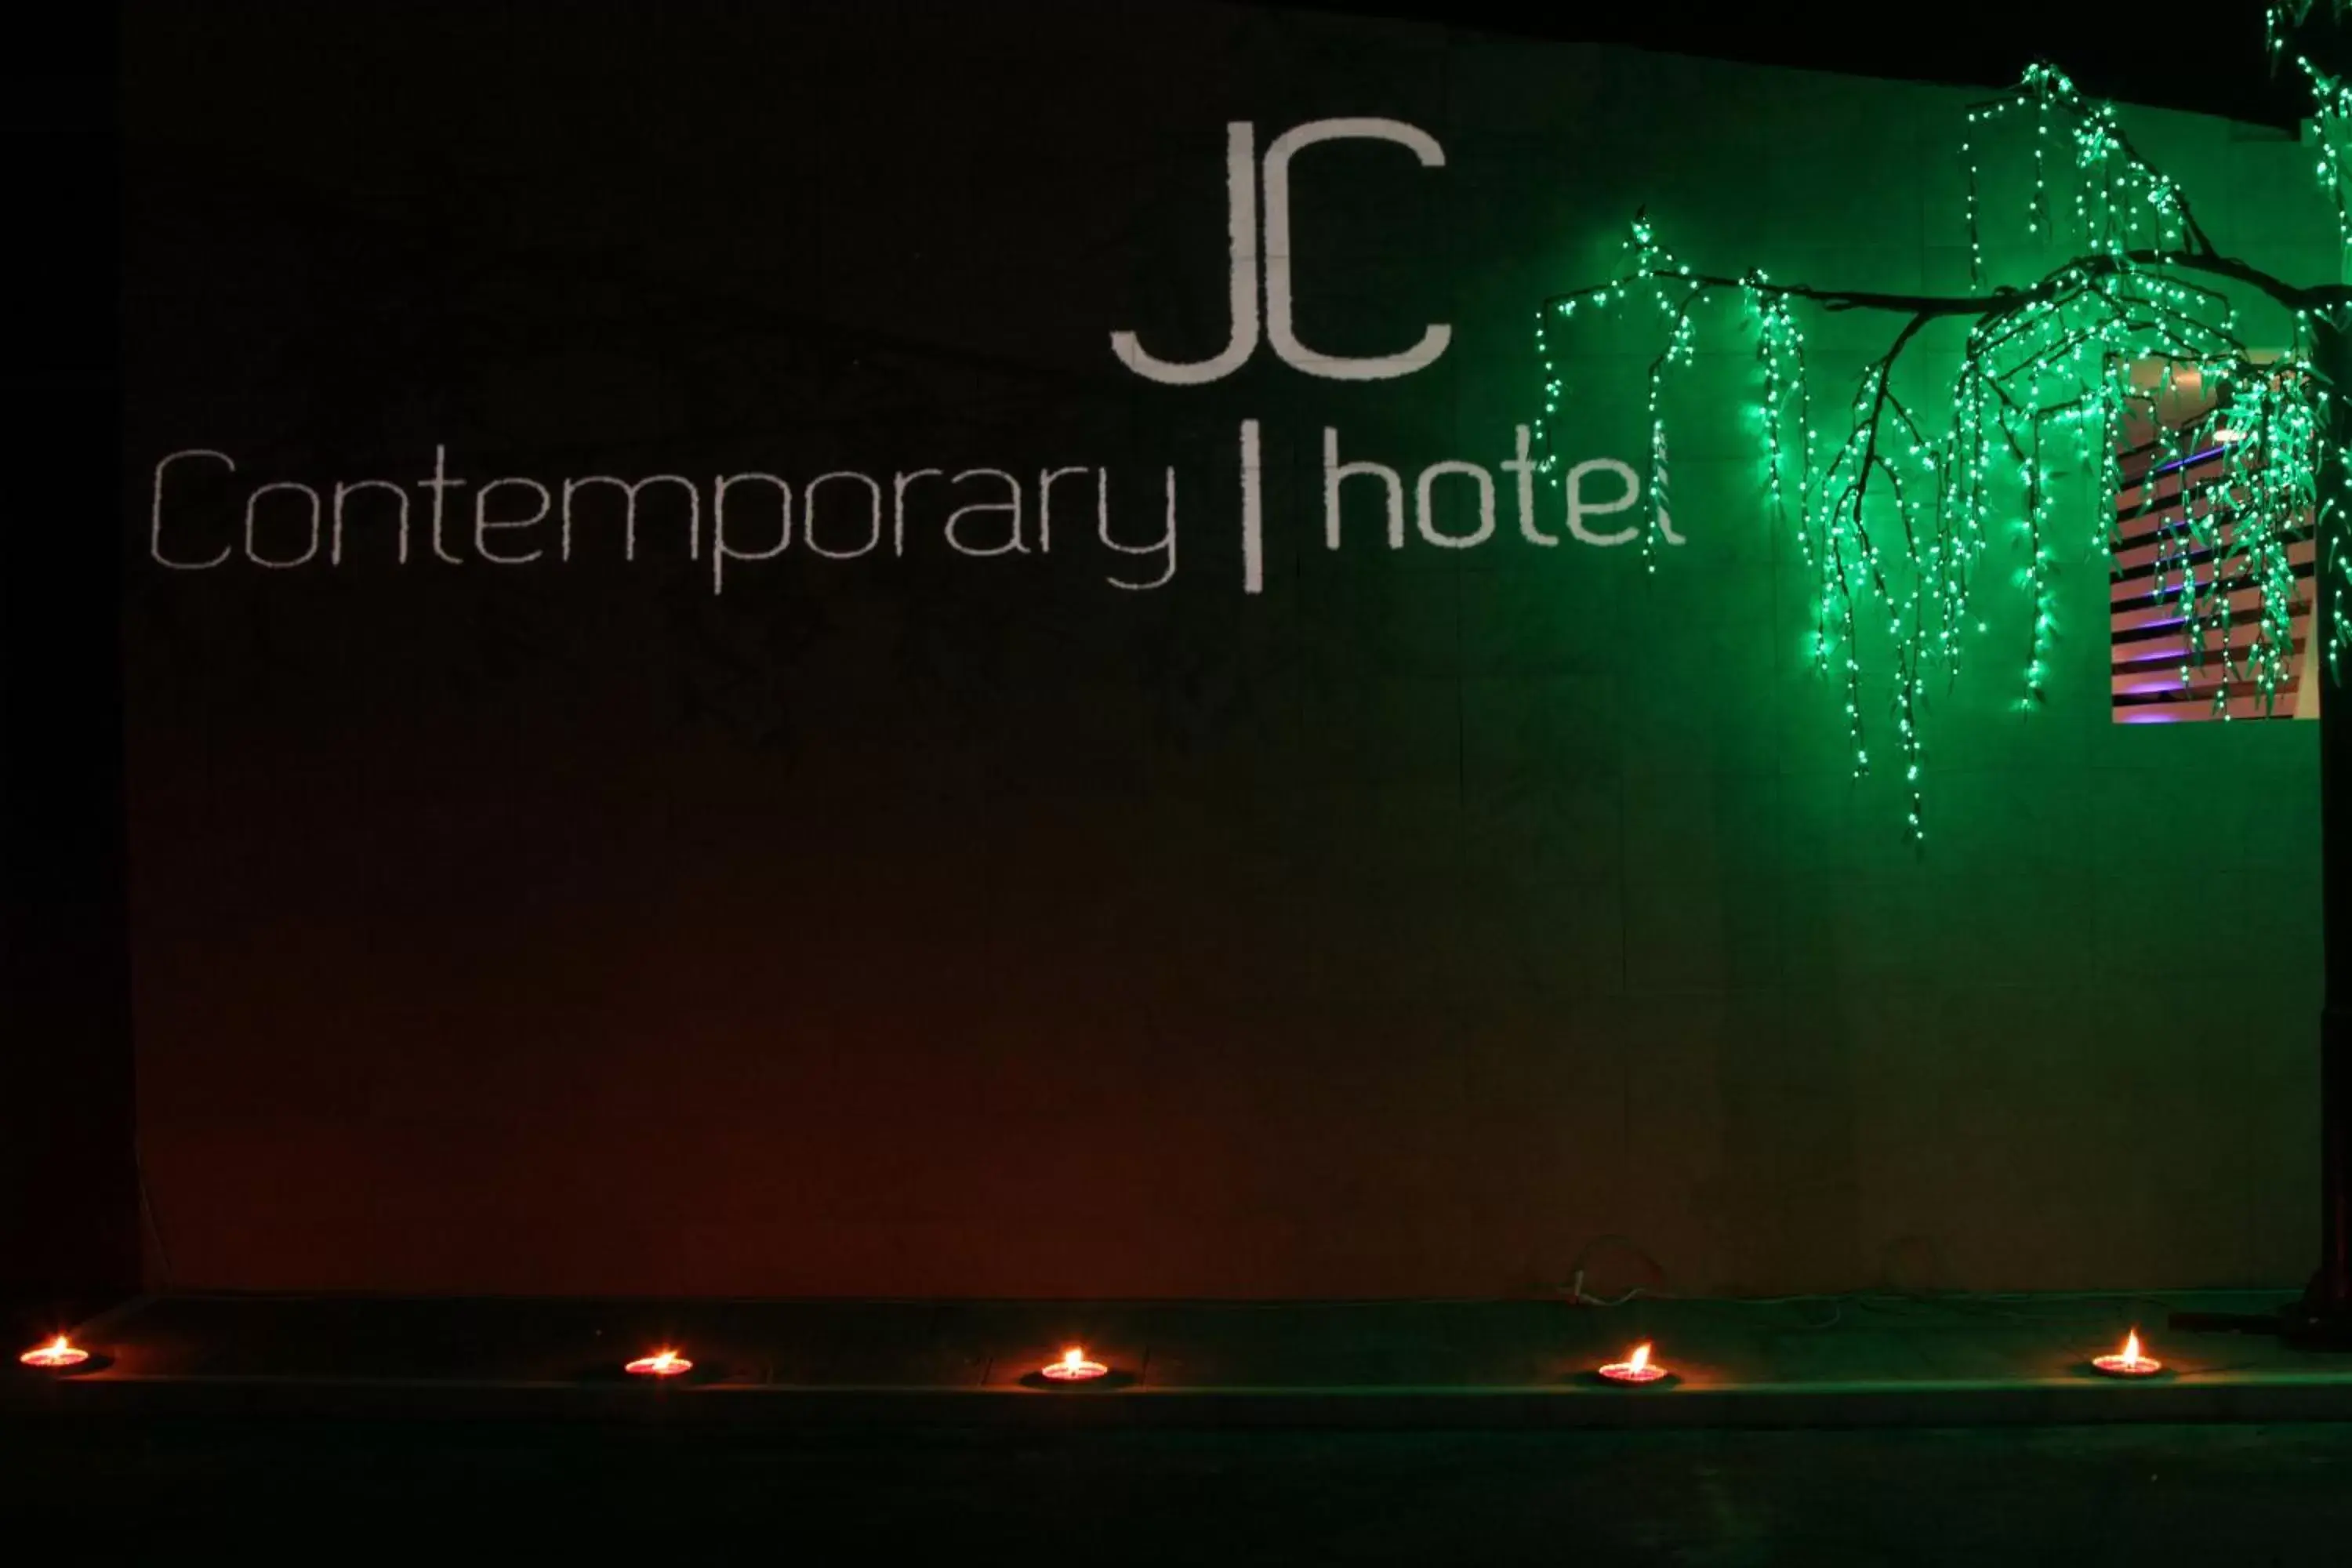 Facade/entrance in JC Hotel